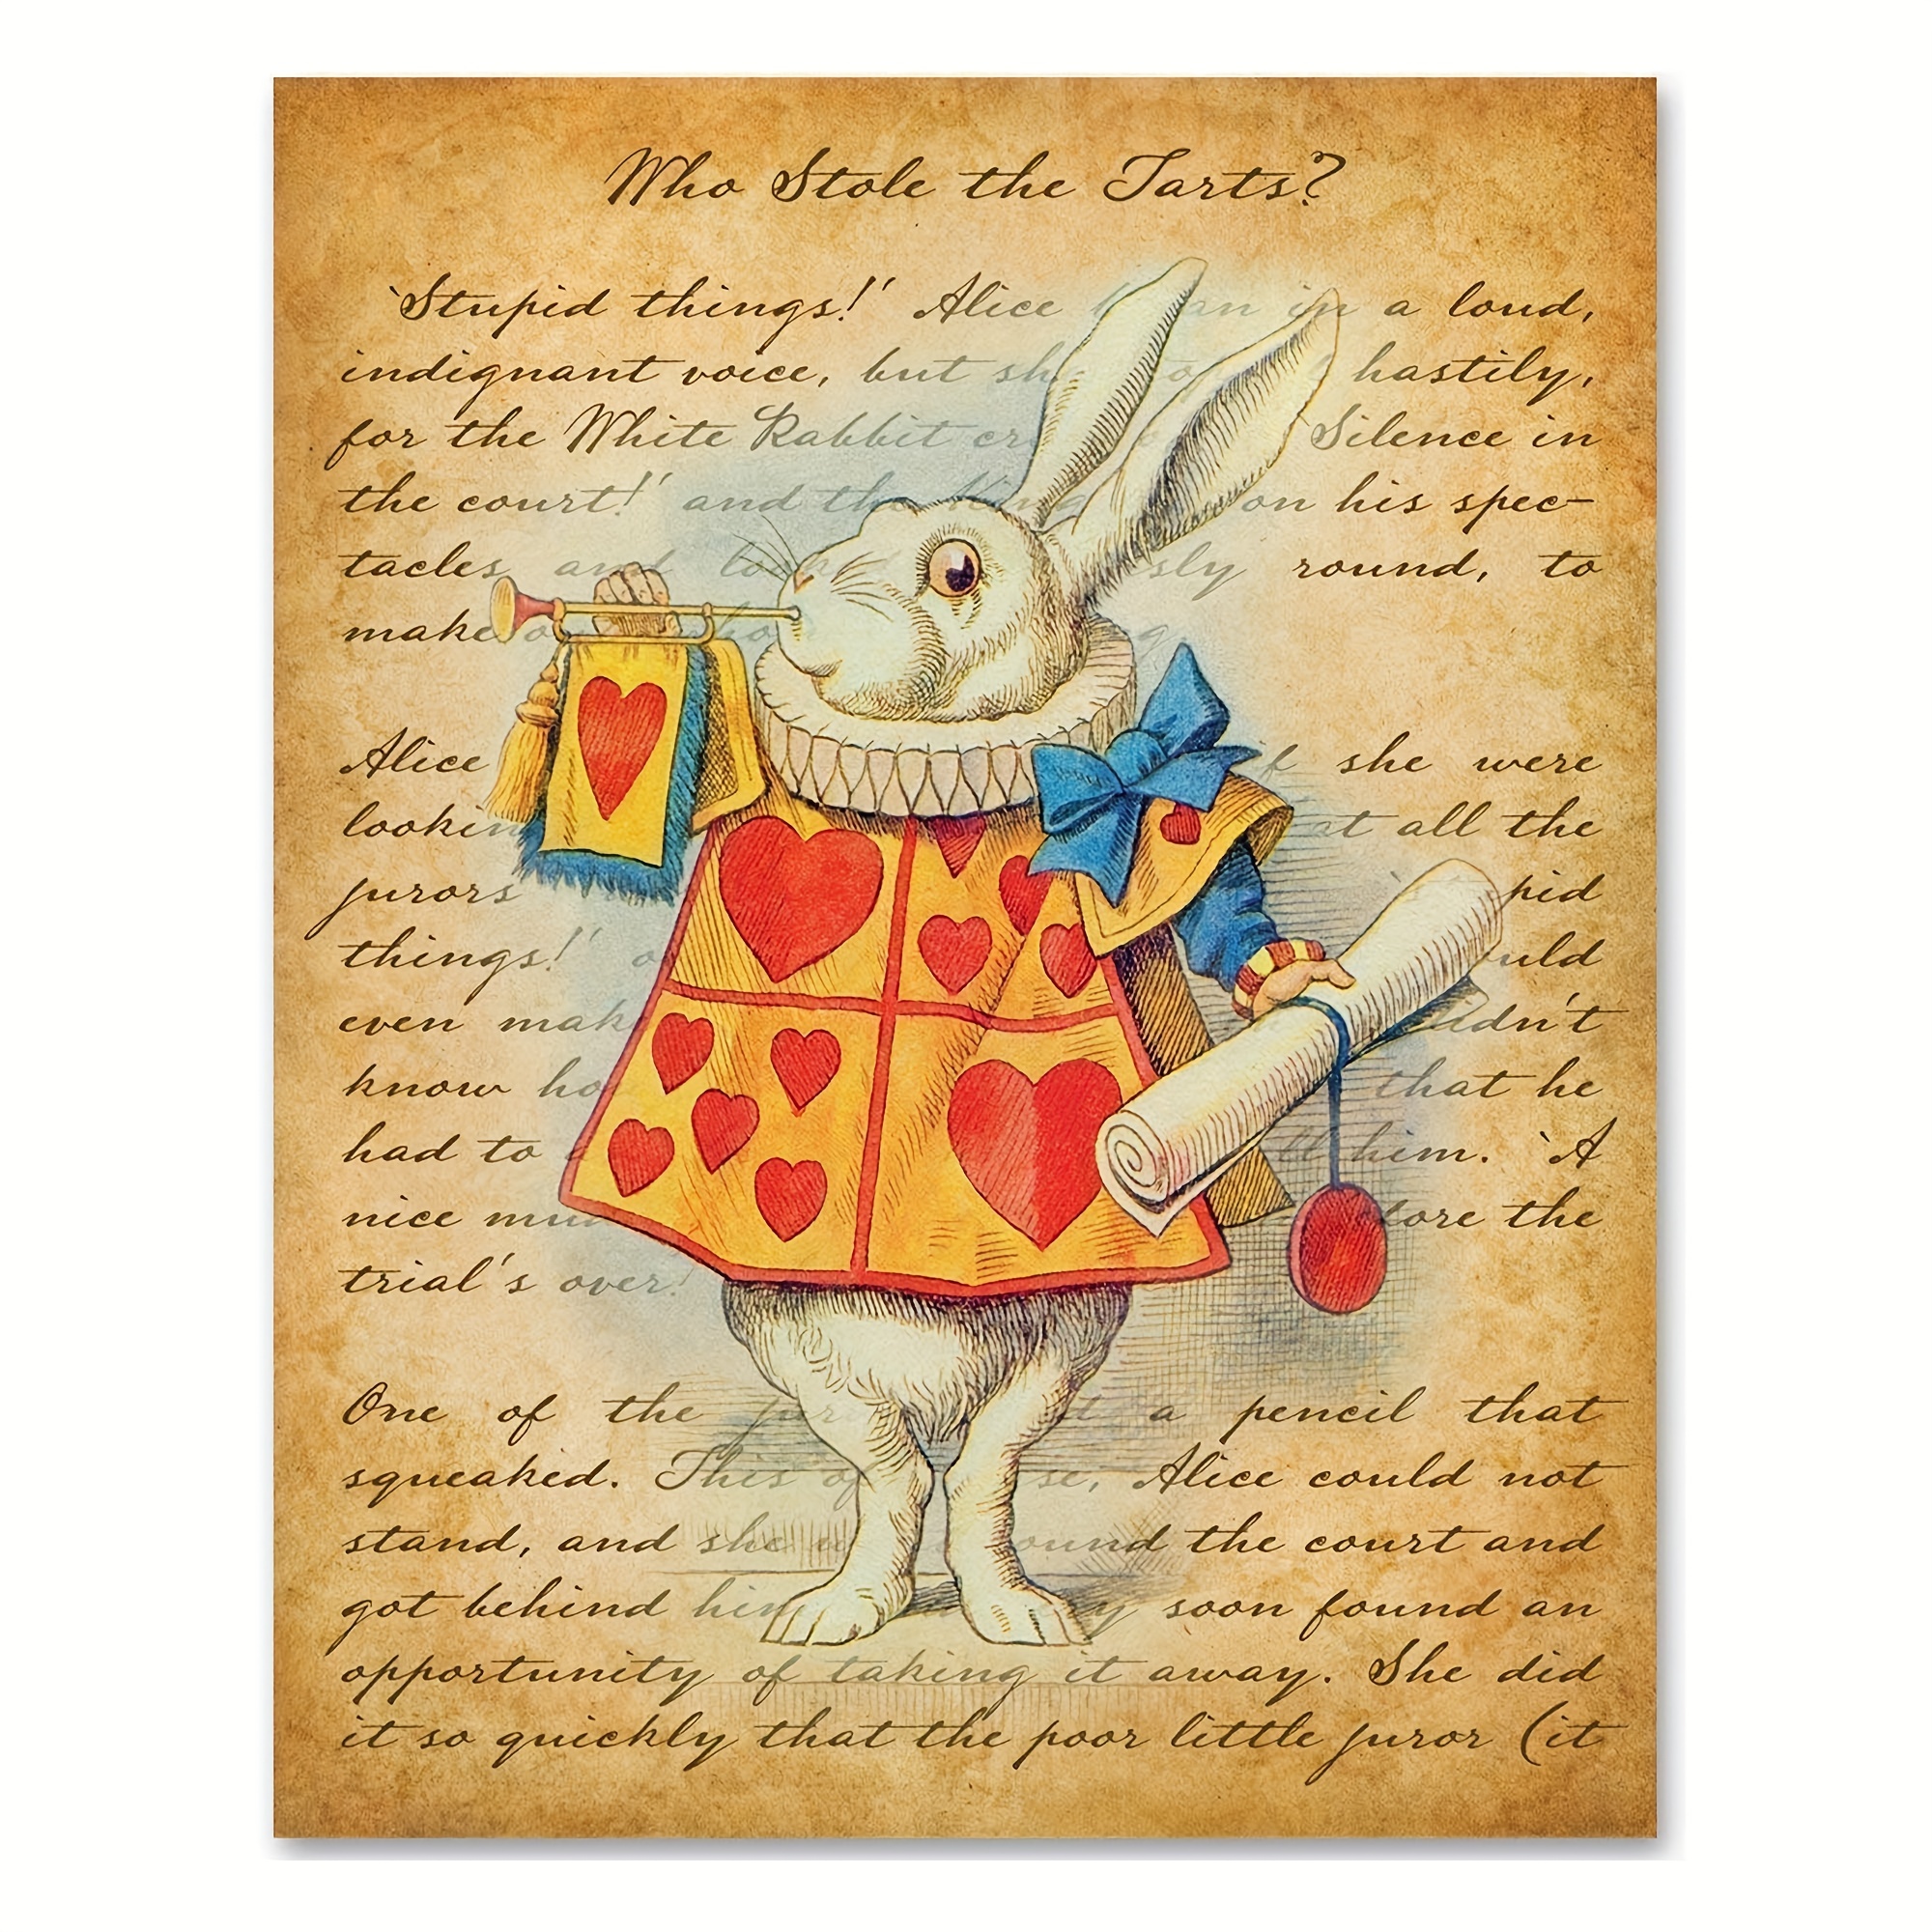 Alice in Wonderland Gifts